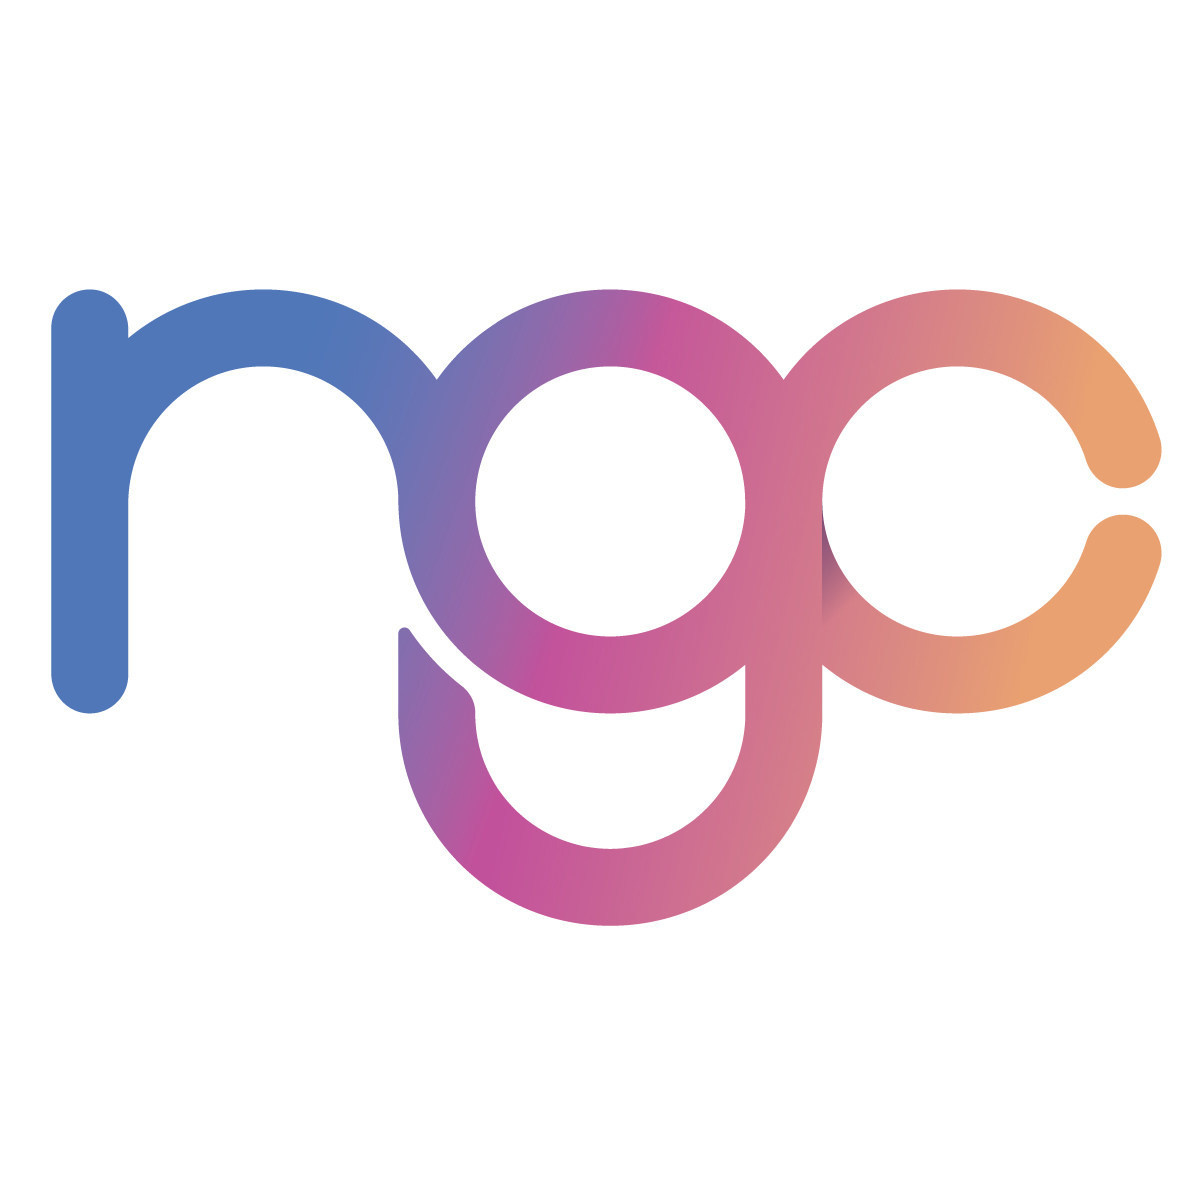 https://mma.prnewswire.com/media/1017709/NGC_Logo.jpg?p=publish